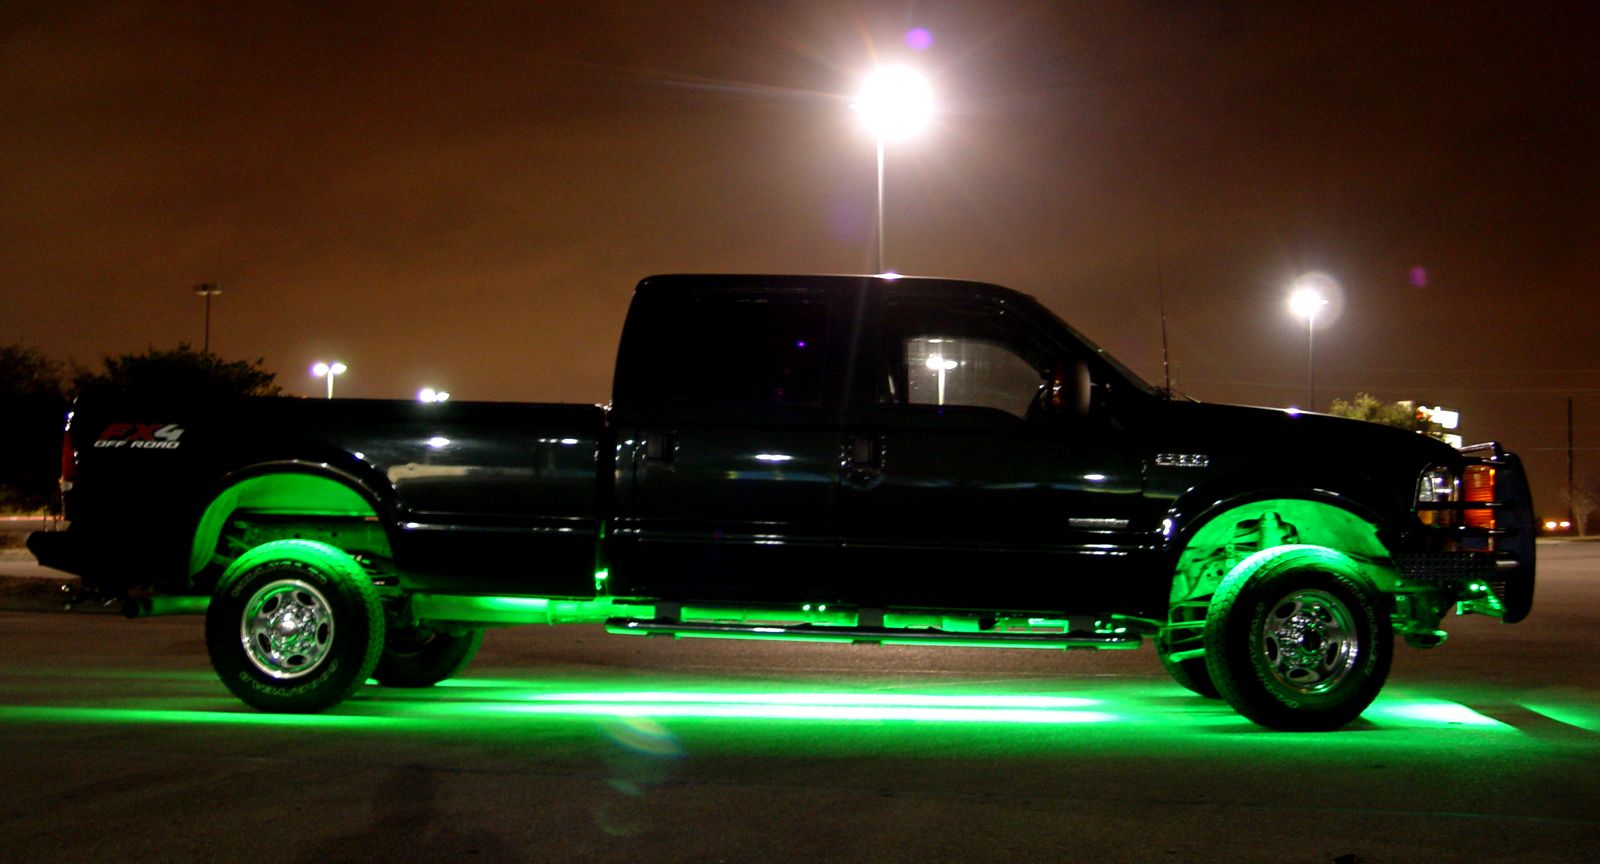 ground Lighting FX on a truck